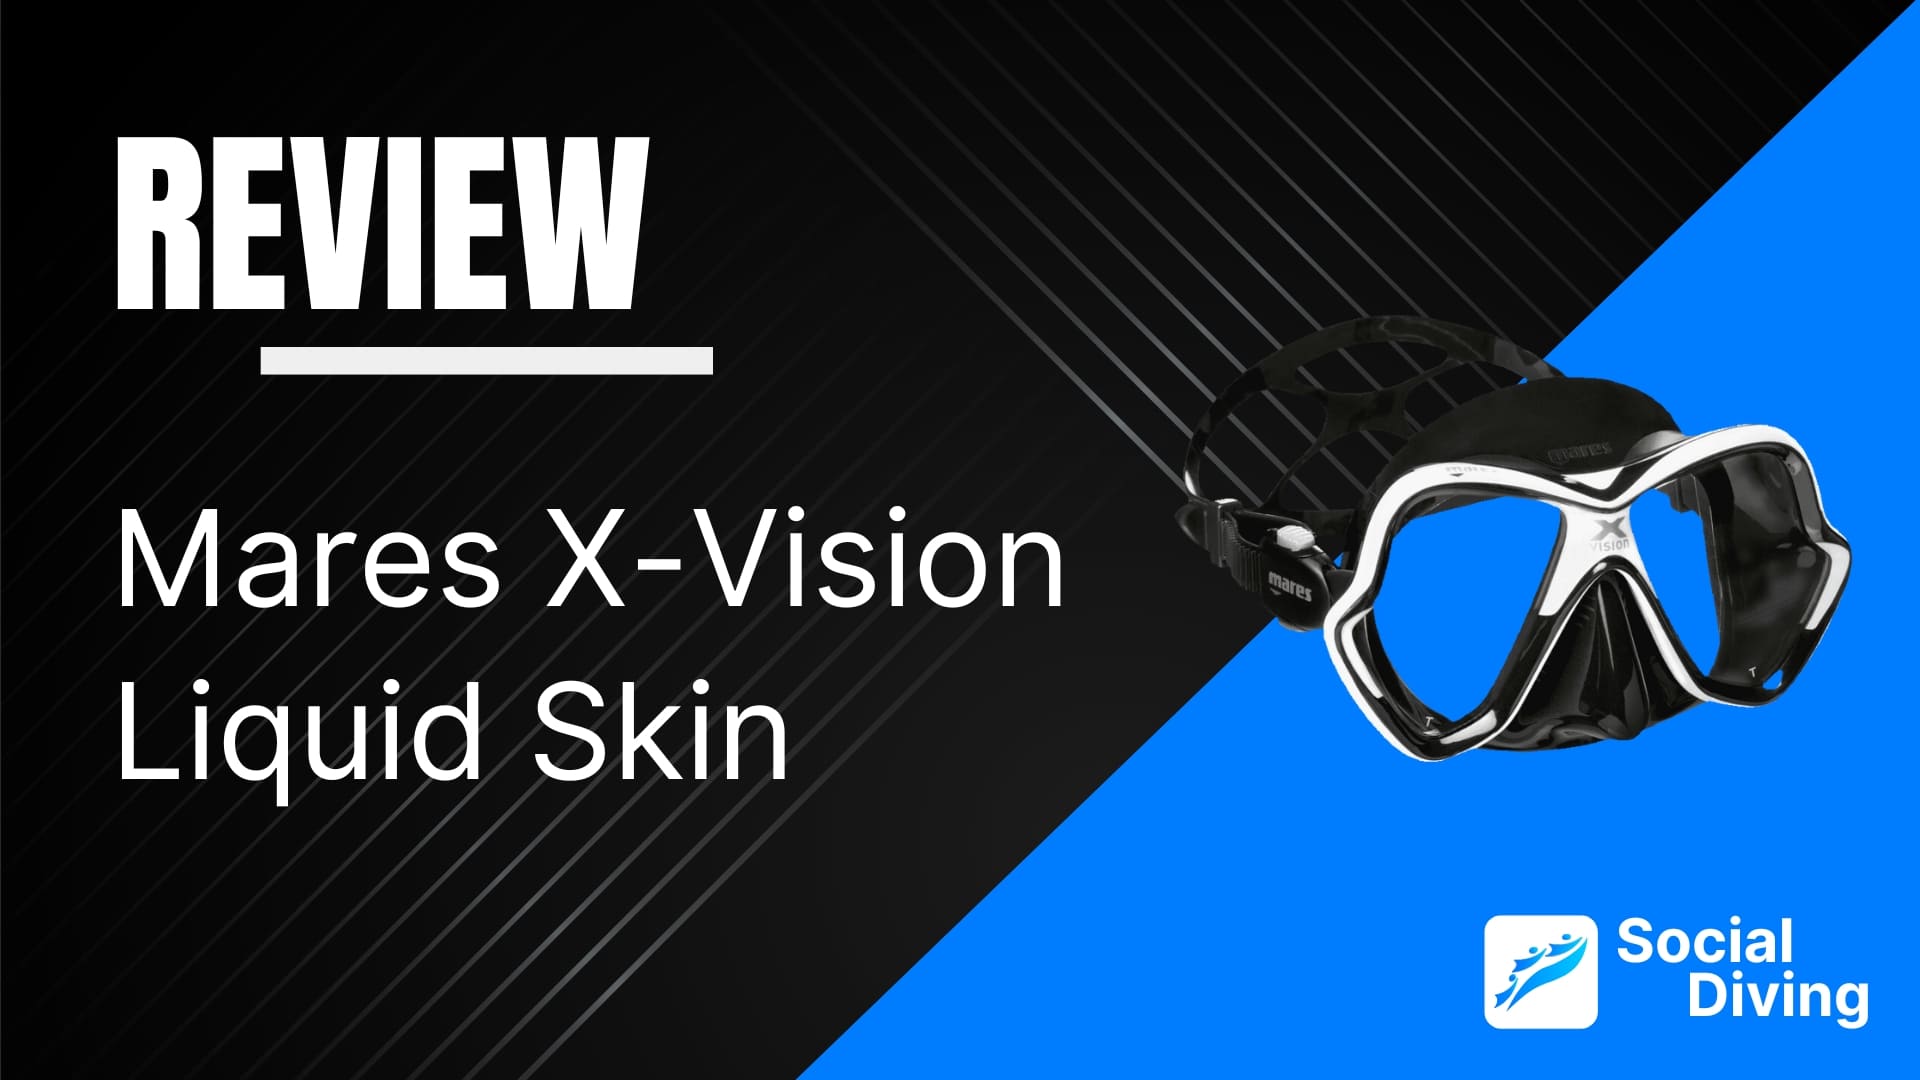 Mares X-Vision Liquid Skin review